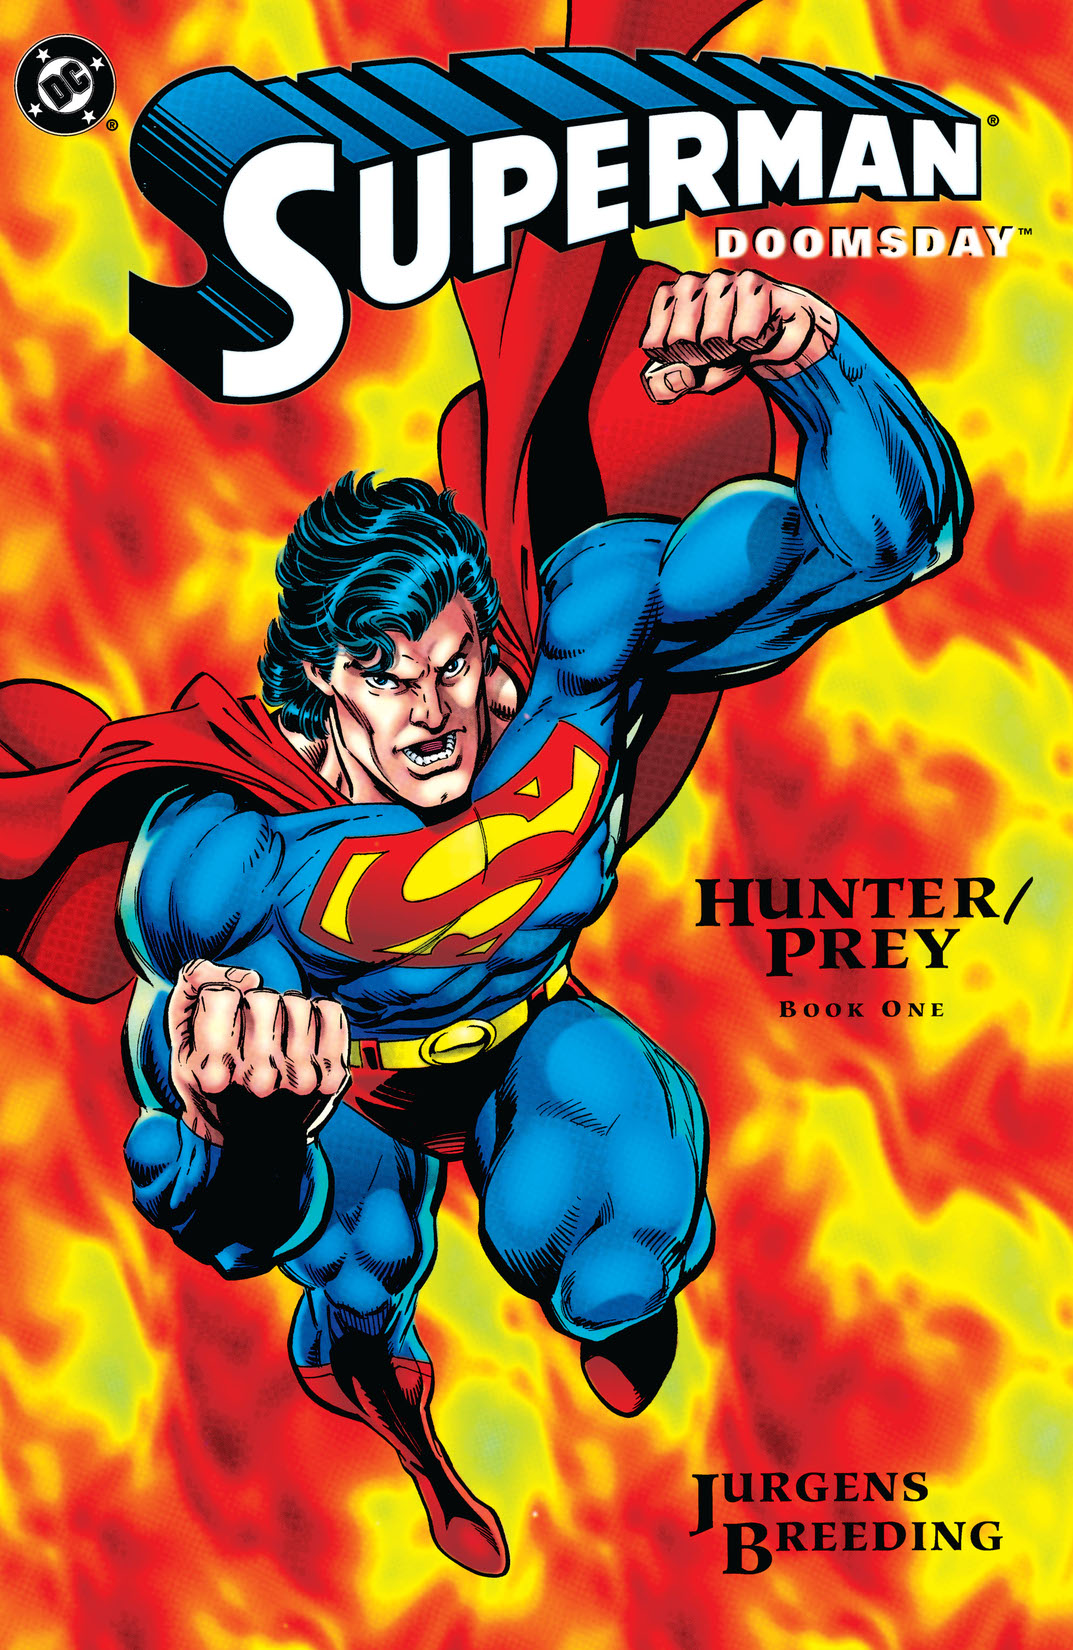 Superman/Doomsday: Hunter/Prey #1 preview images